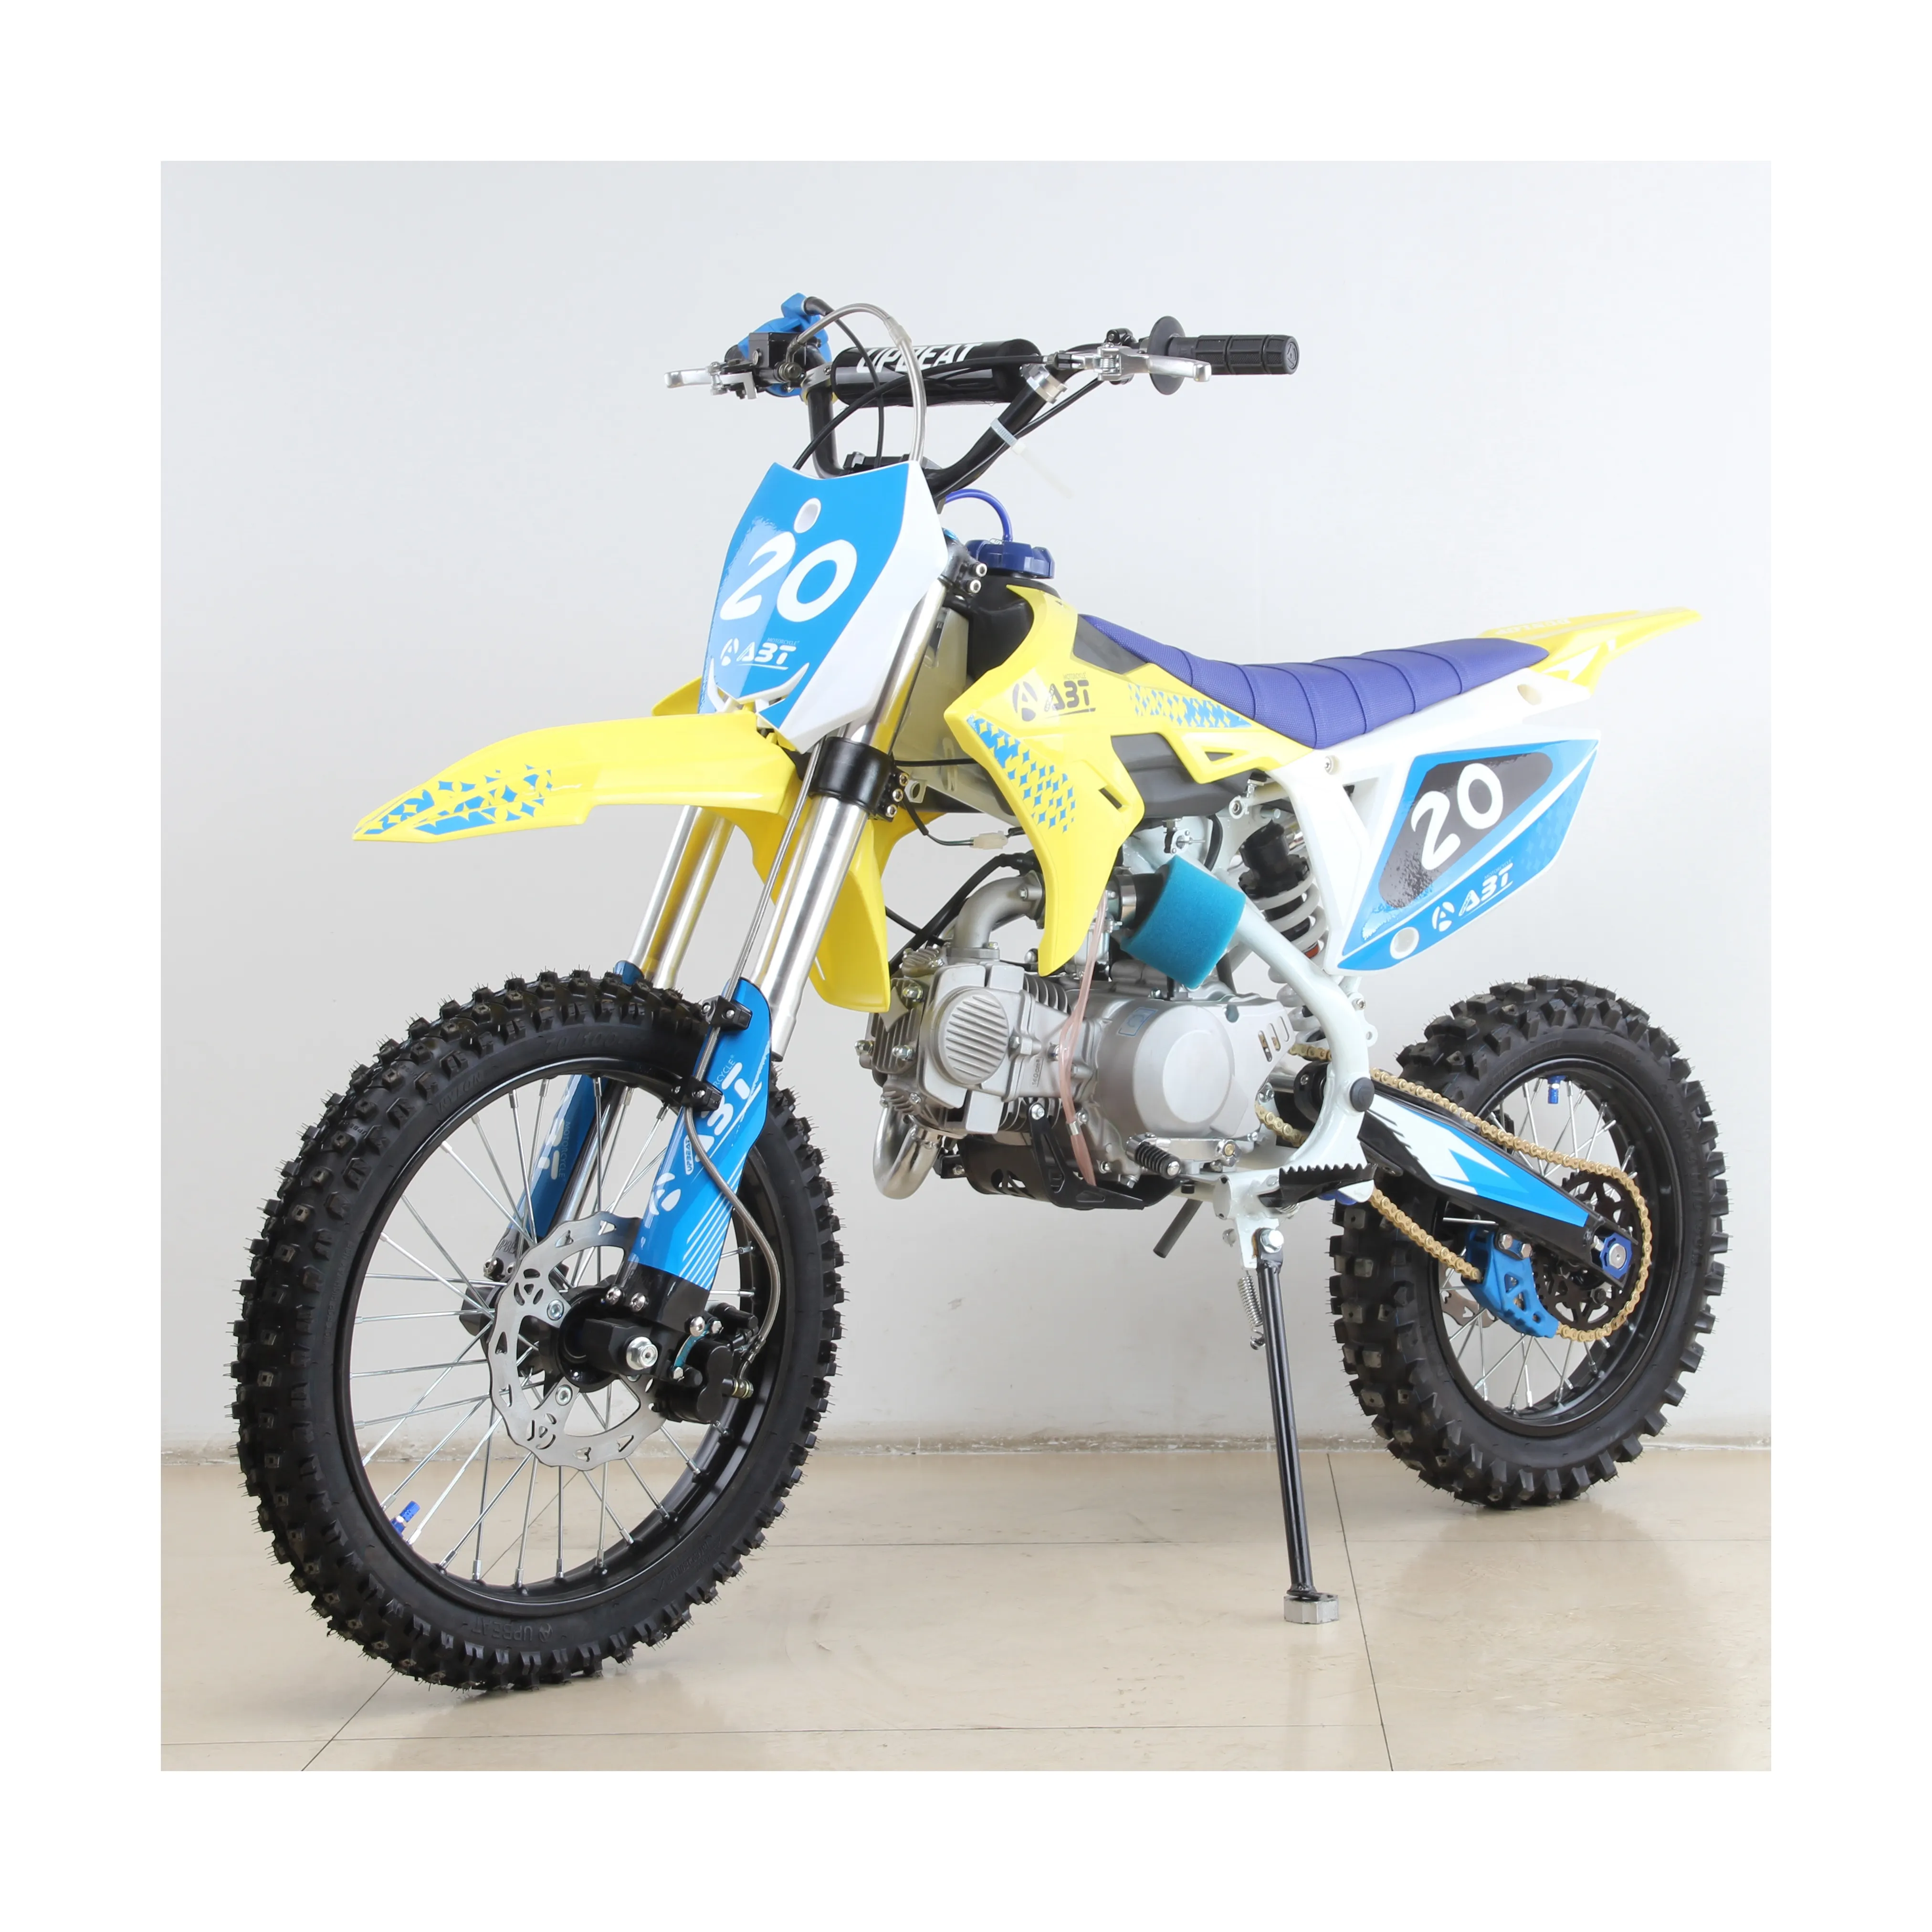 UPBEAT Drite สีเหลืองสีน้ำเงินราคาถูก125cc มอเตอร์ไซค์ออฟโรดรถจักรยานยนต์เดิร์ทไบค์125cc